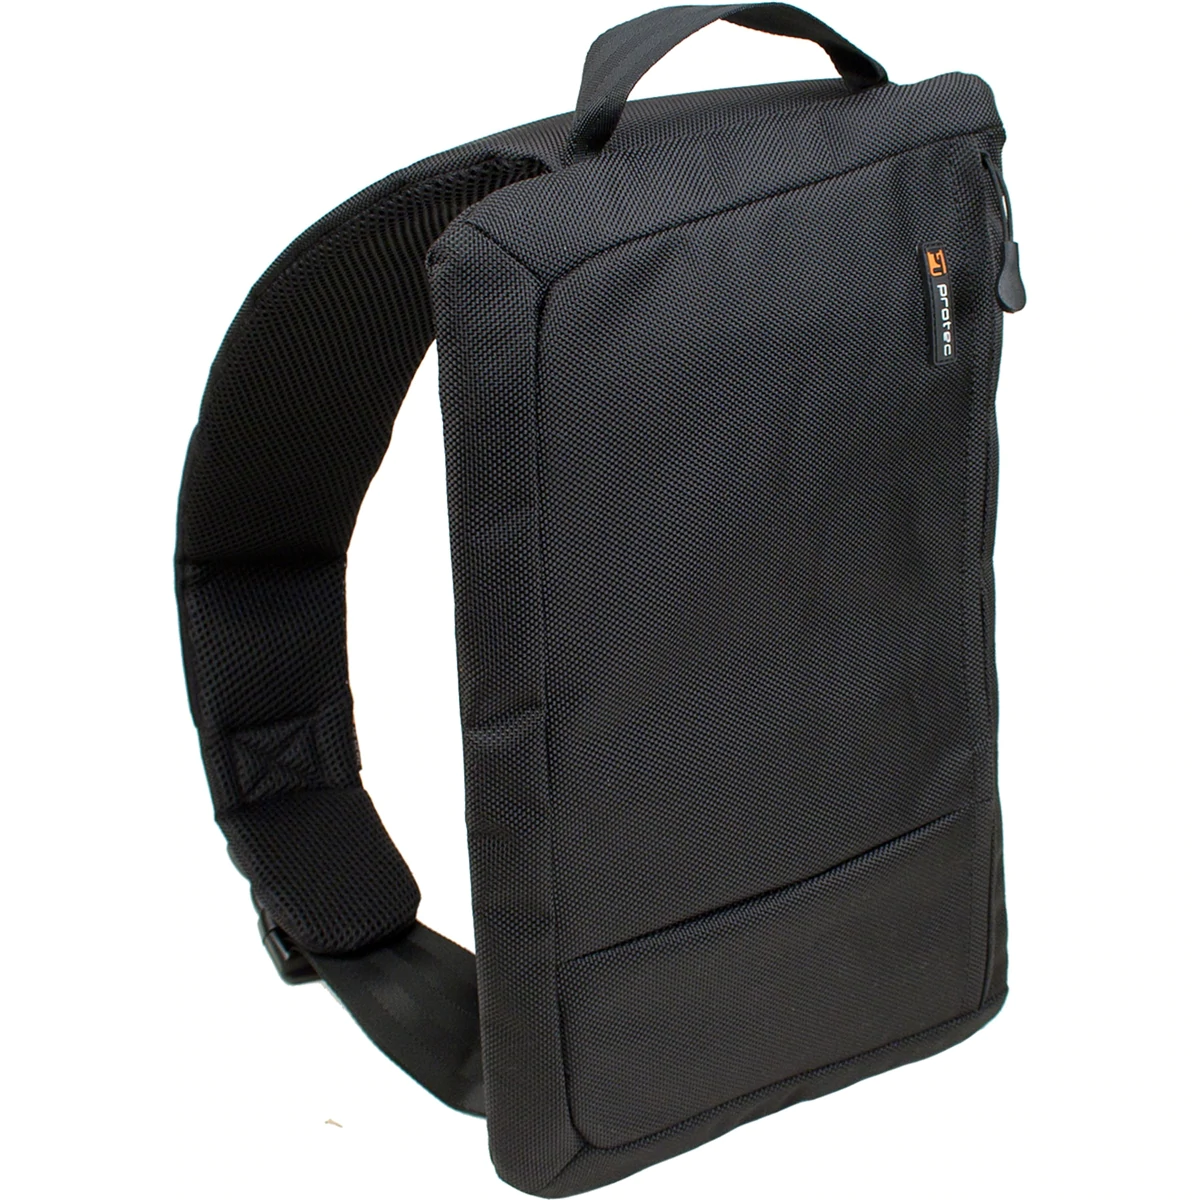 PROTEC ZIP iPad/Tablet Sling Bag